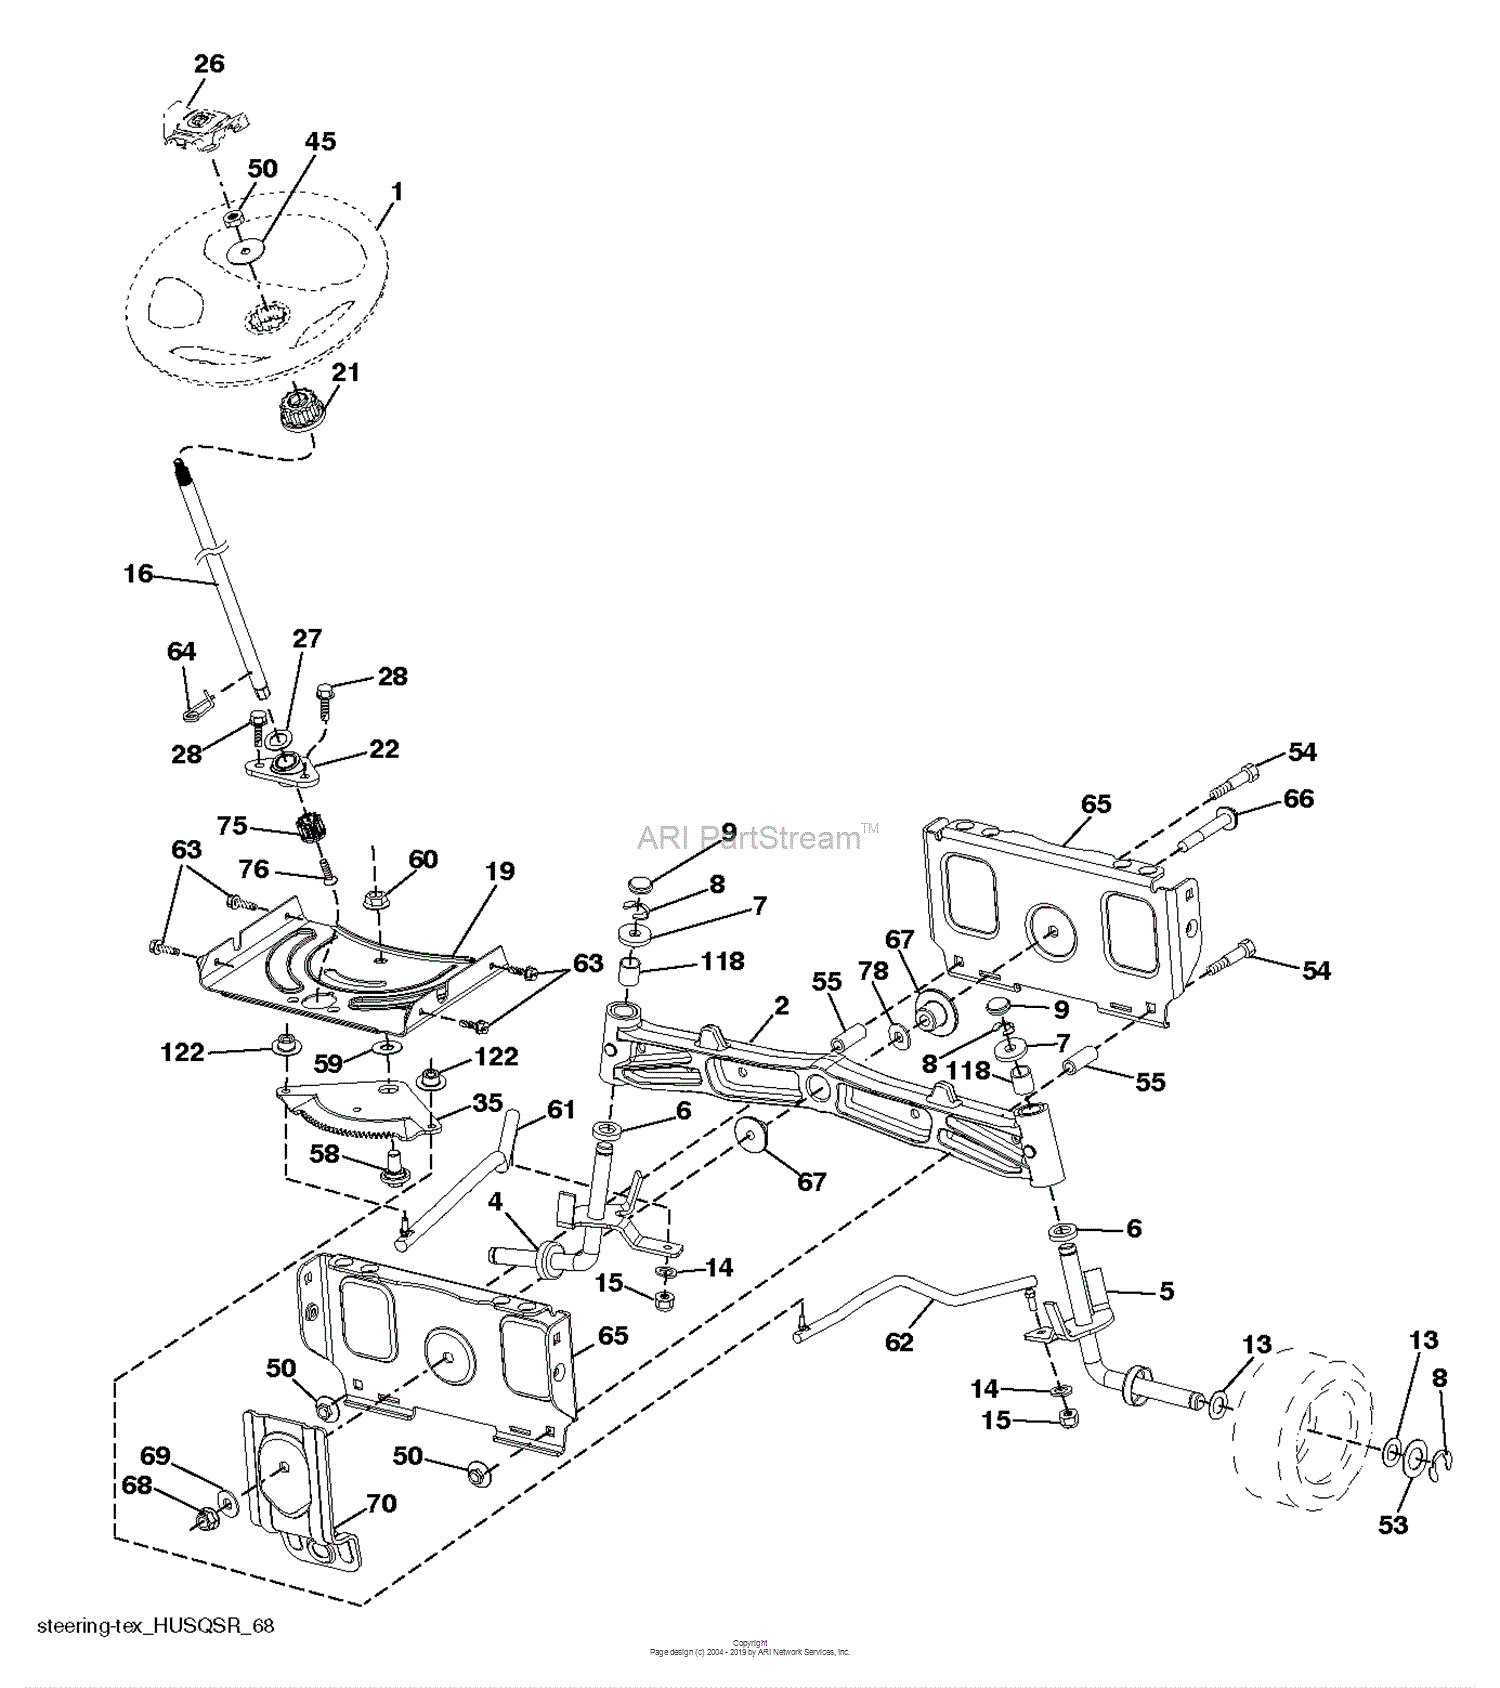 28 Husqvarna 371xp Parts Diagram - Wiring Diagram List